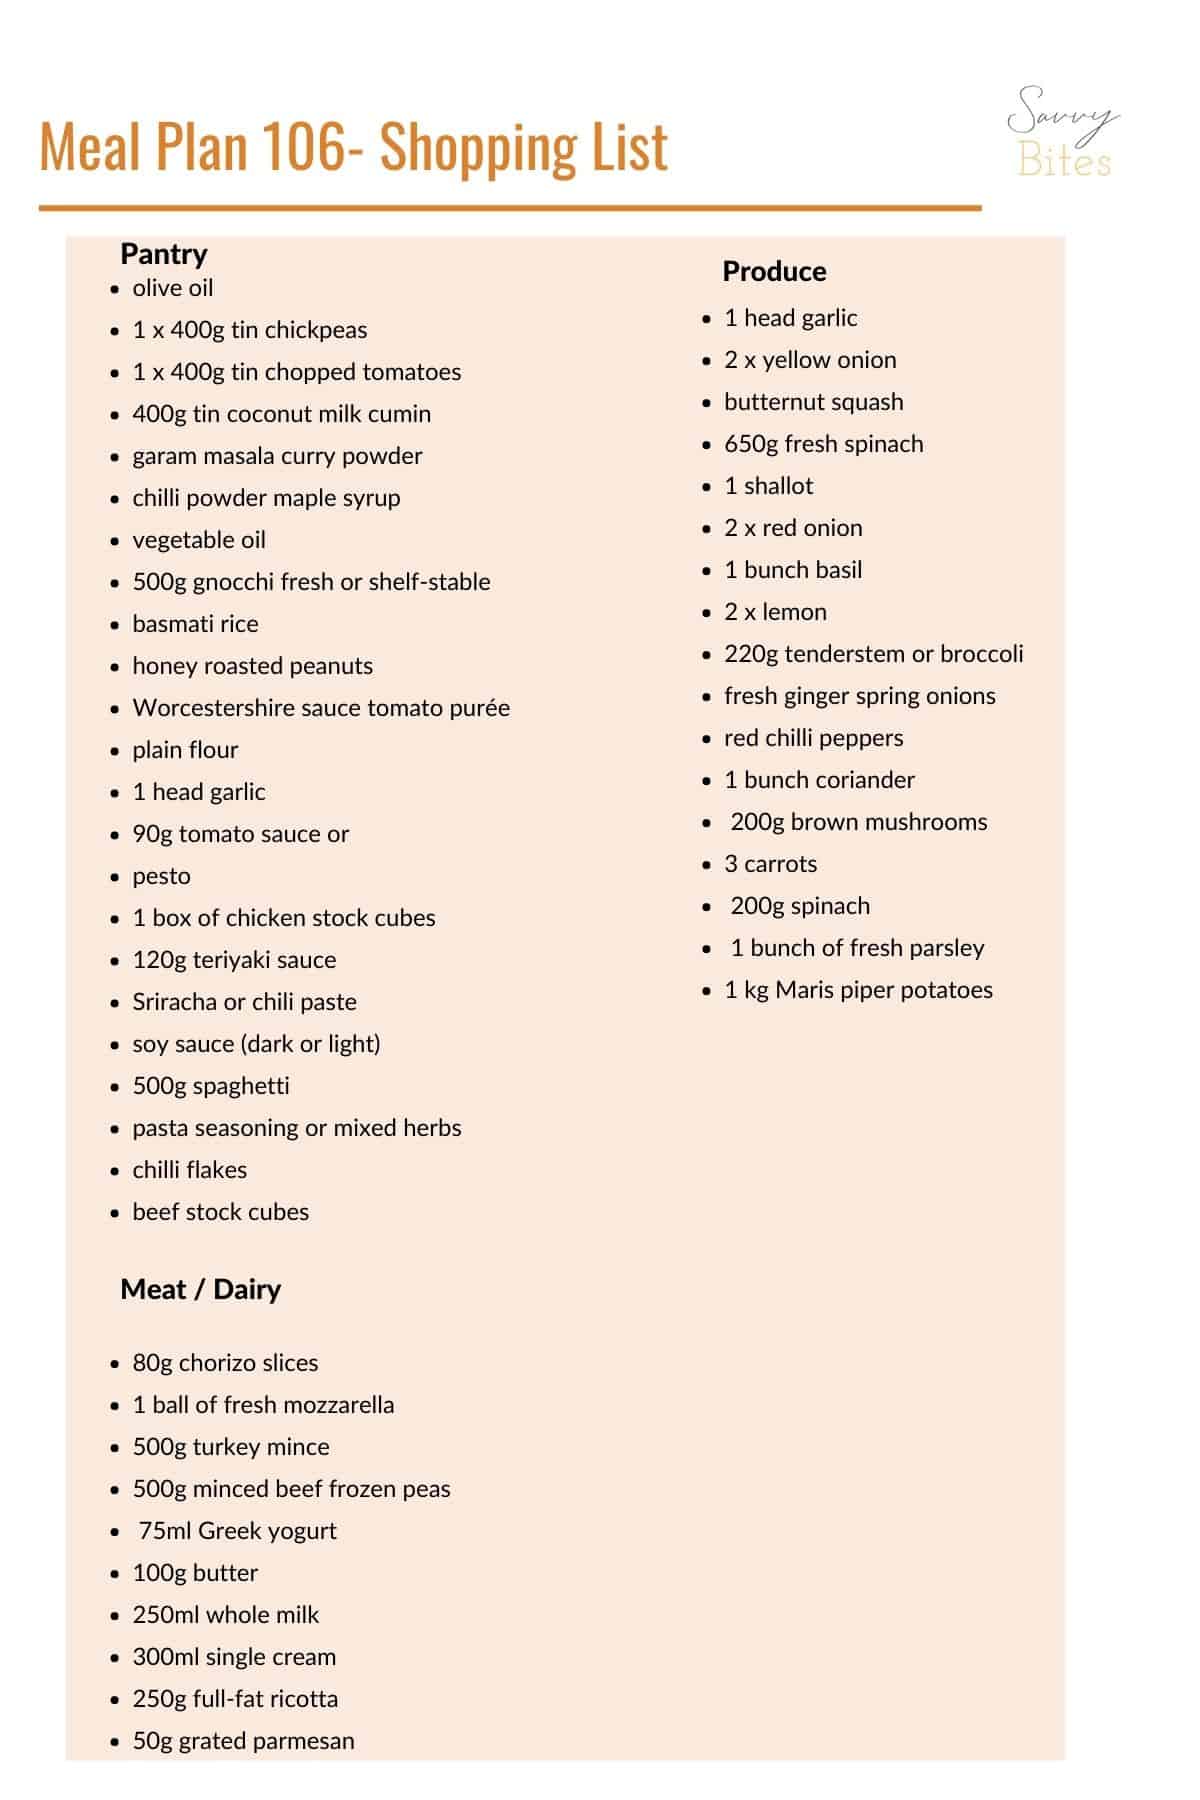 Budget meal plan 106 shopping list.